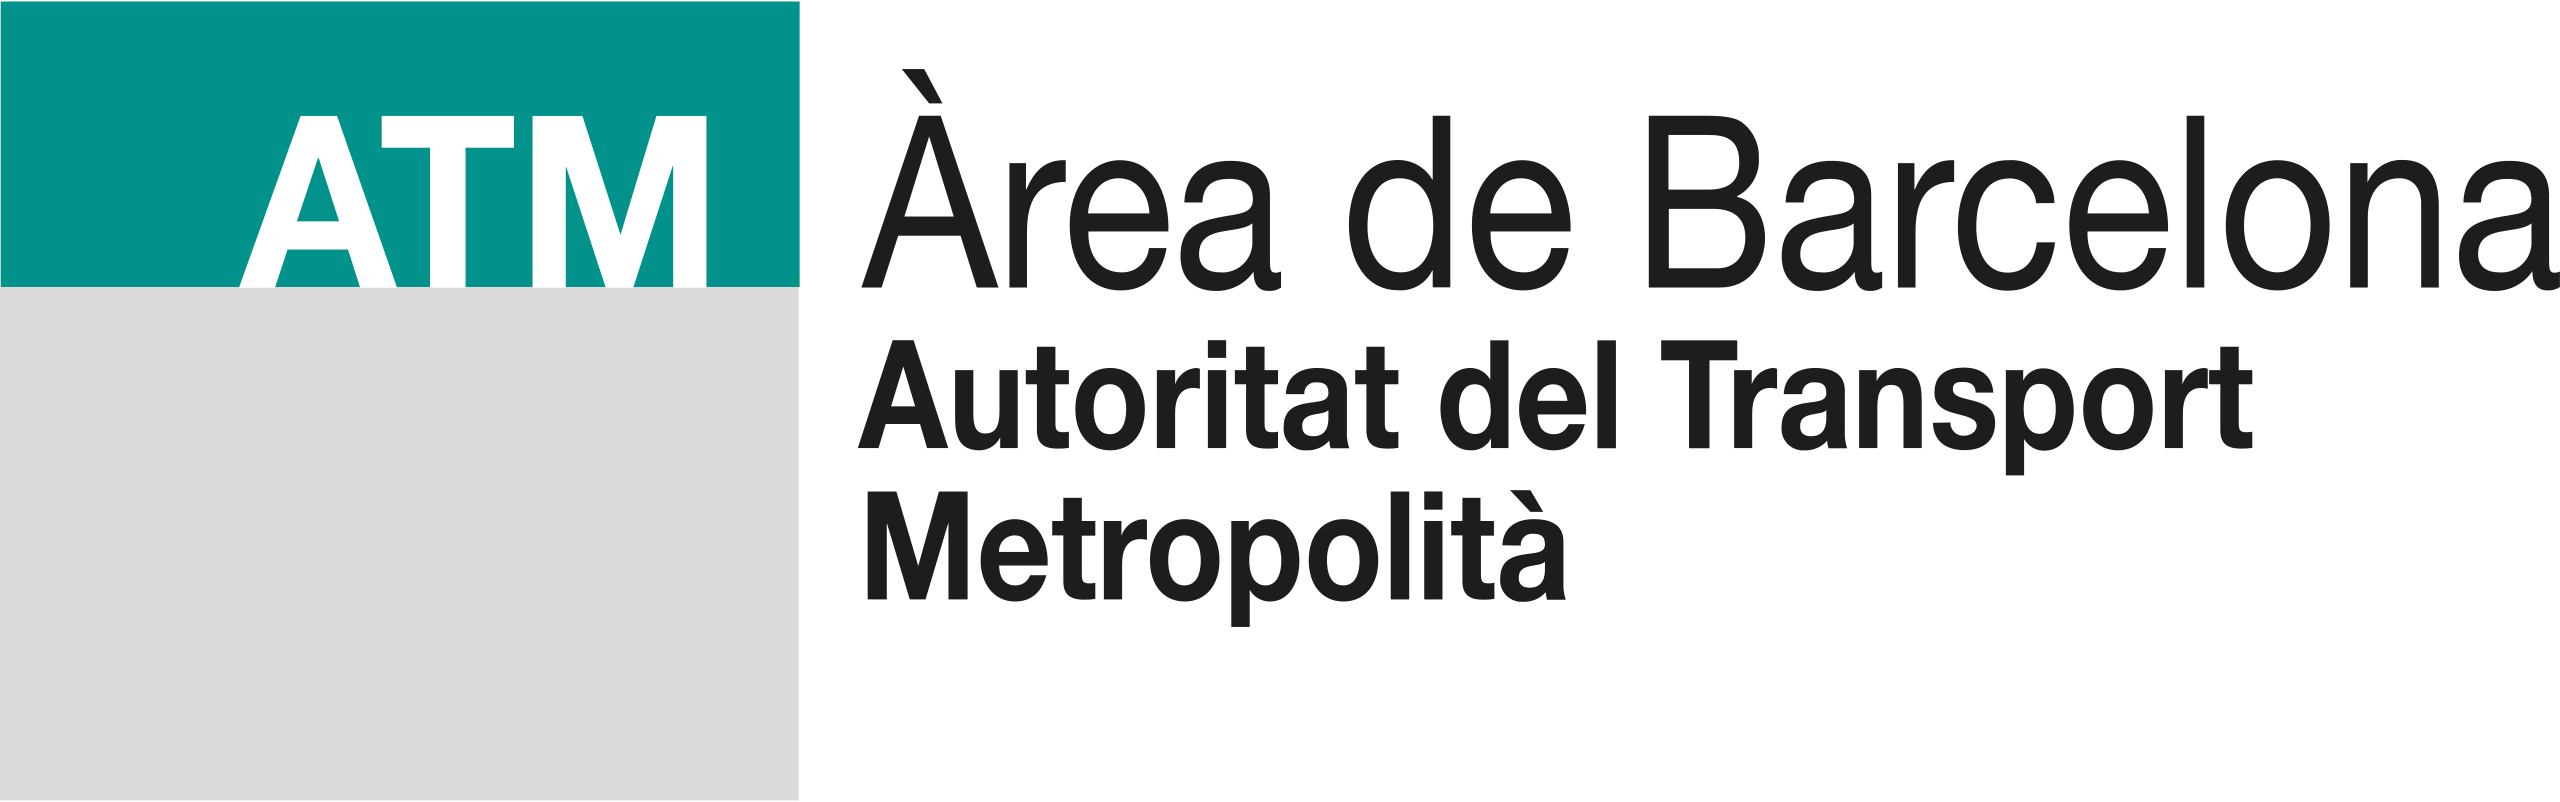 ATM_Barcelona_logo.svg